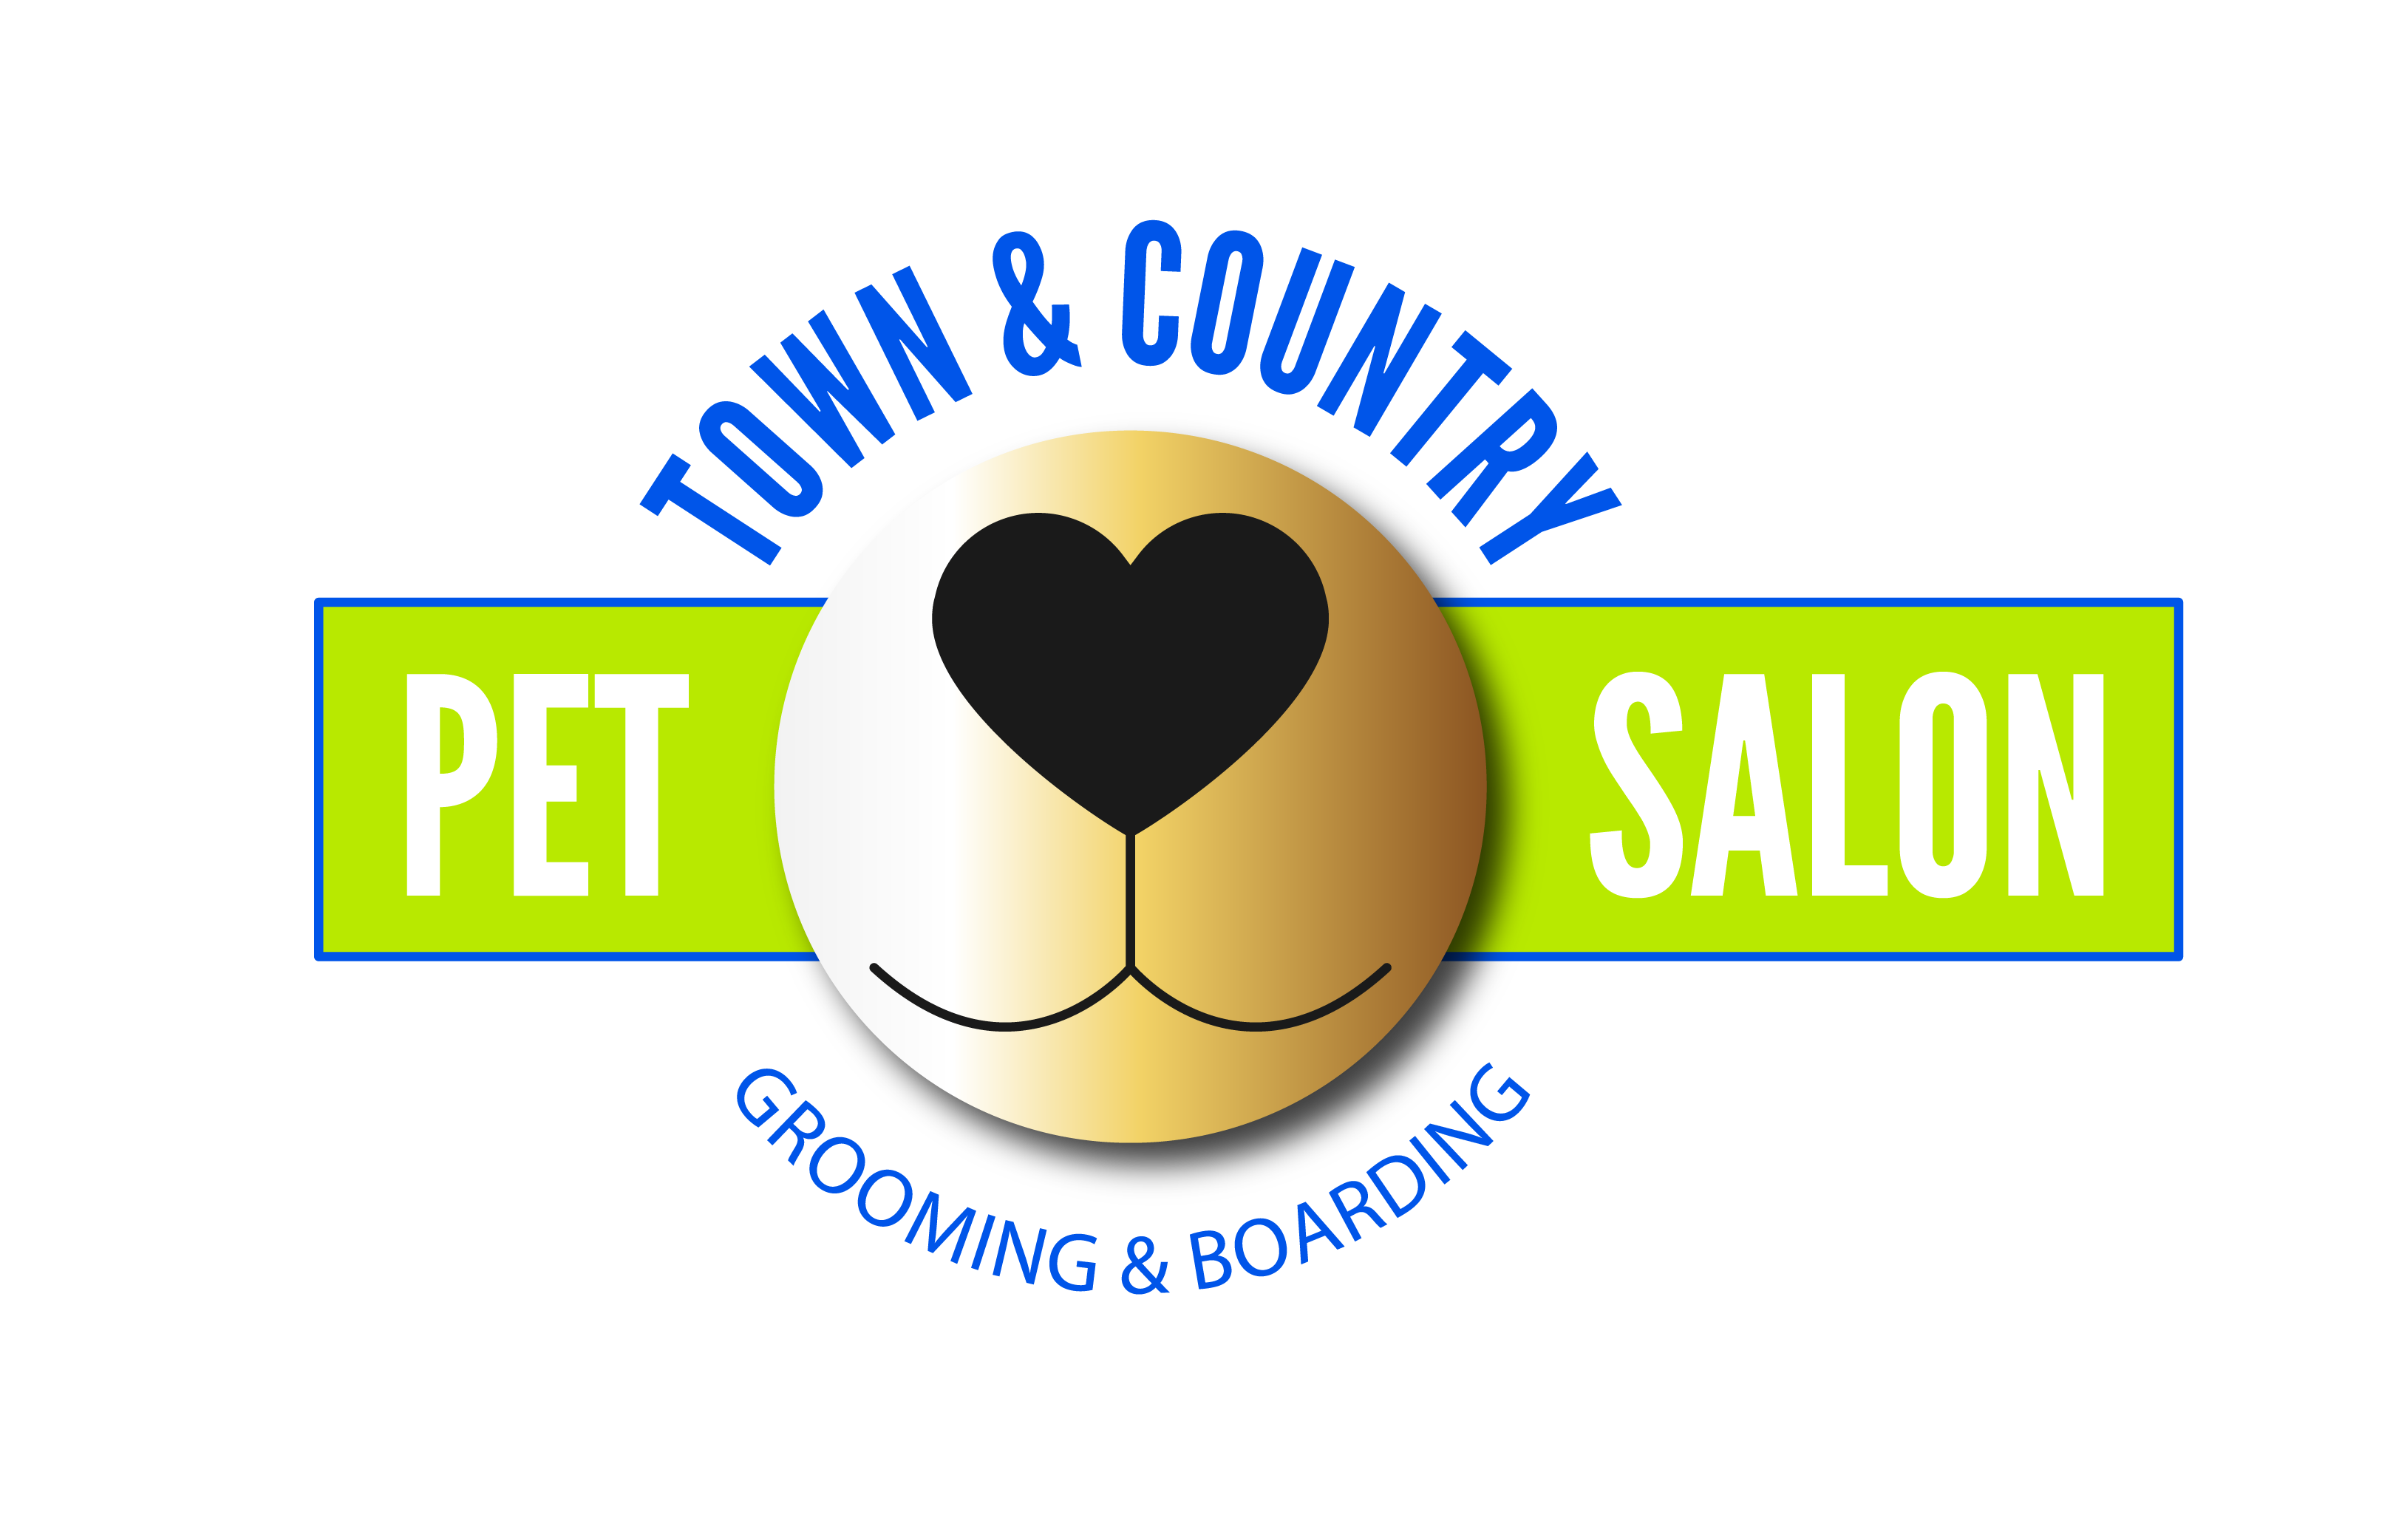 Town & Country Pet Salon